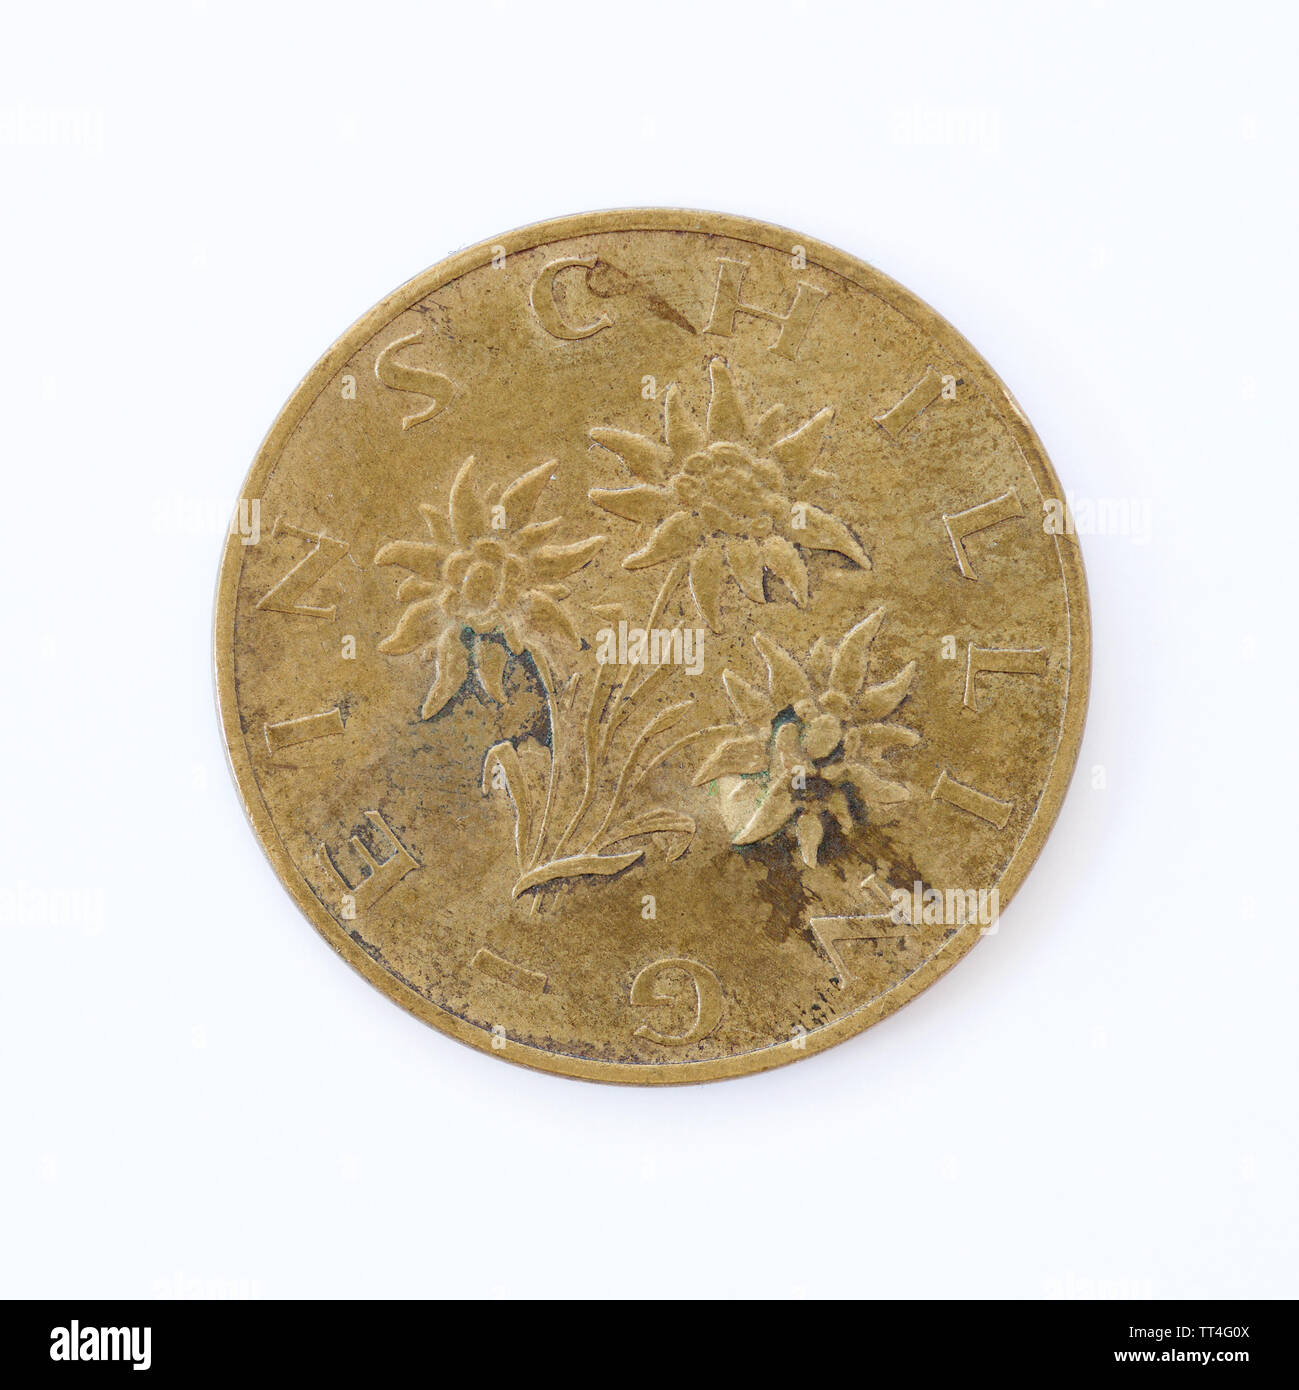 Austria 1 Schilling Coin - 1978 Stock Photo